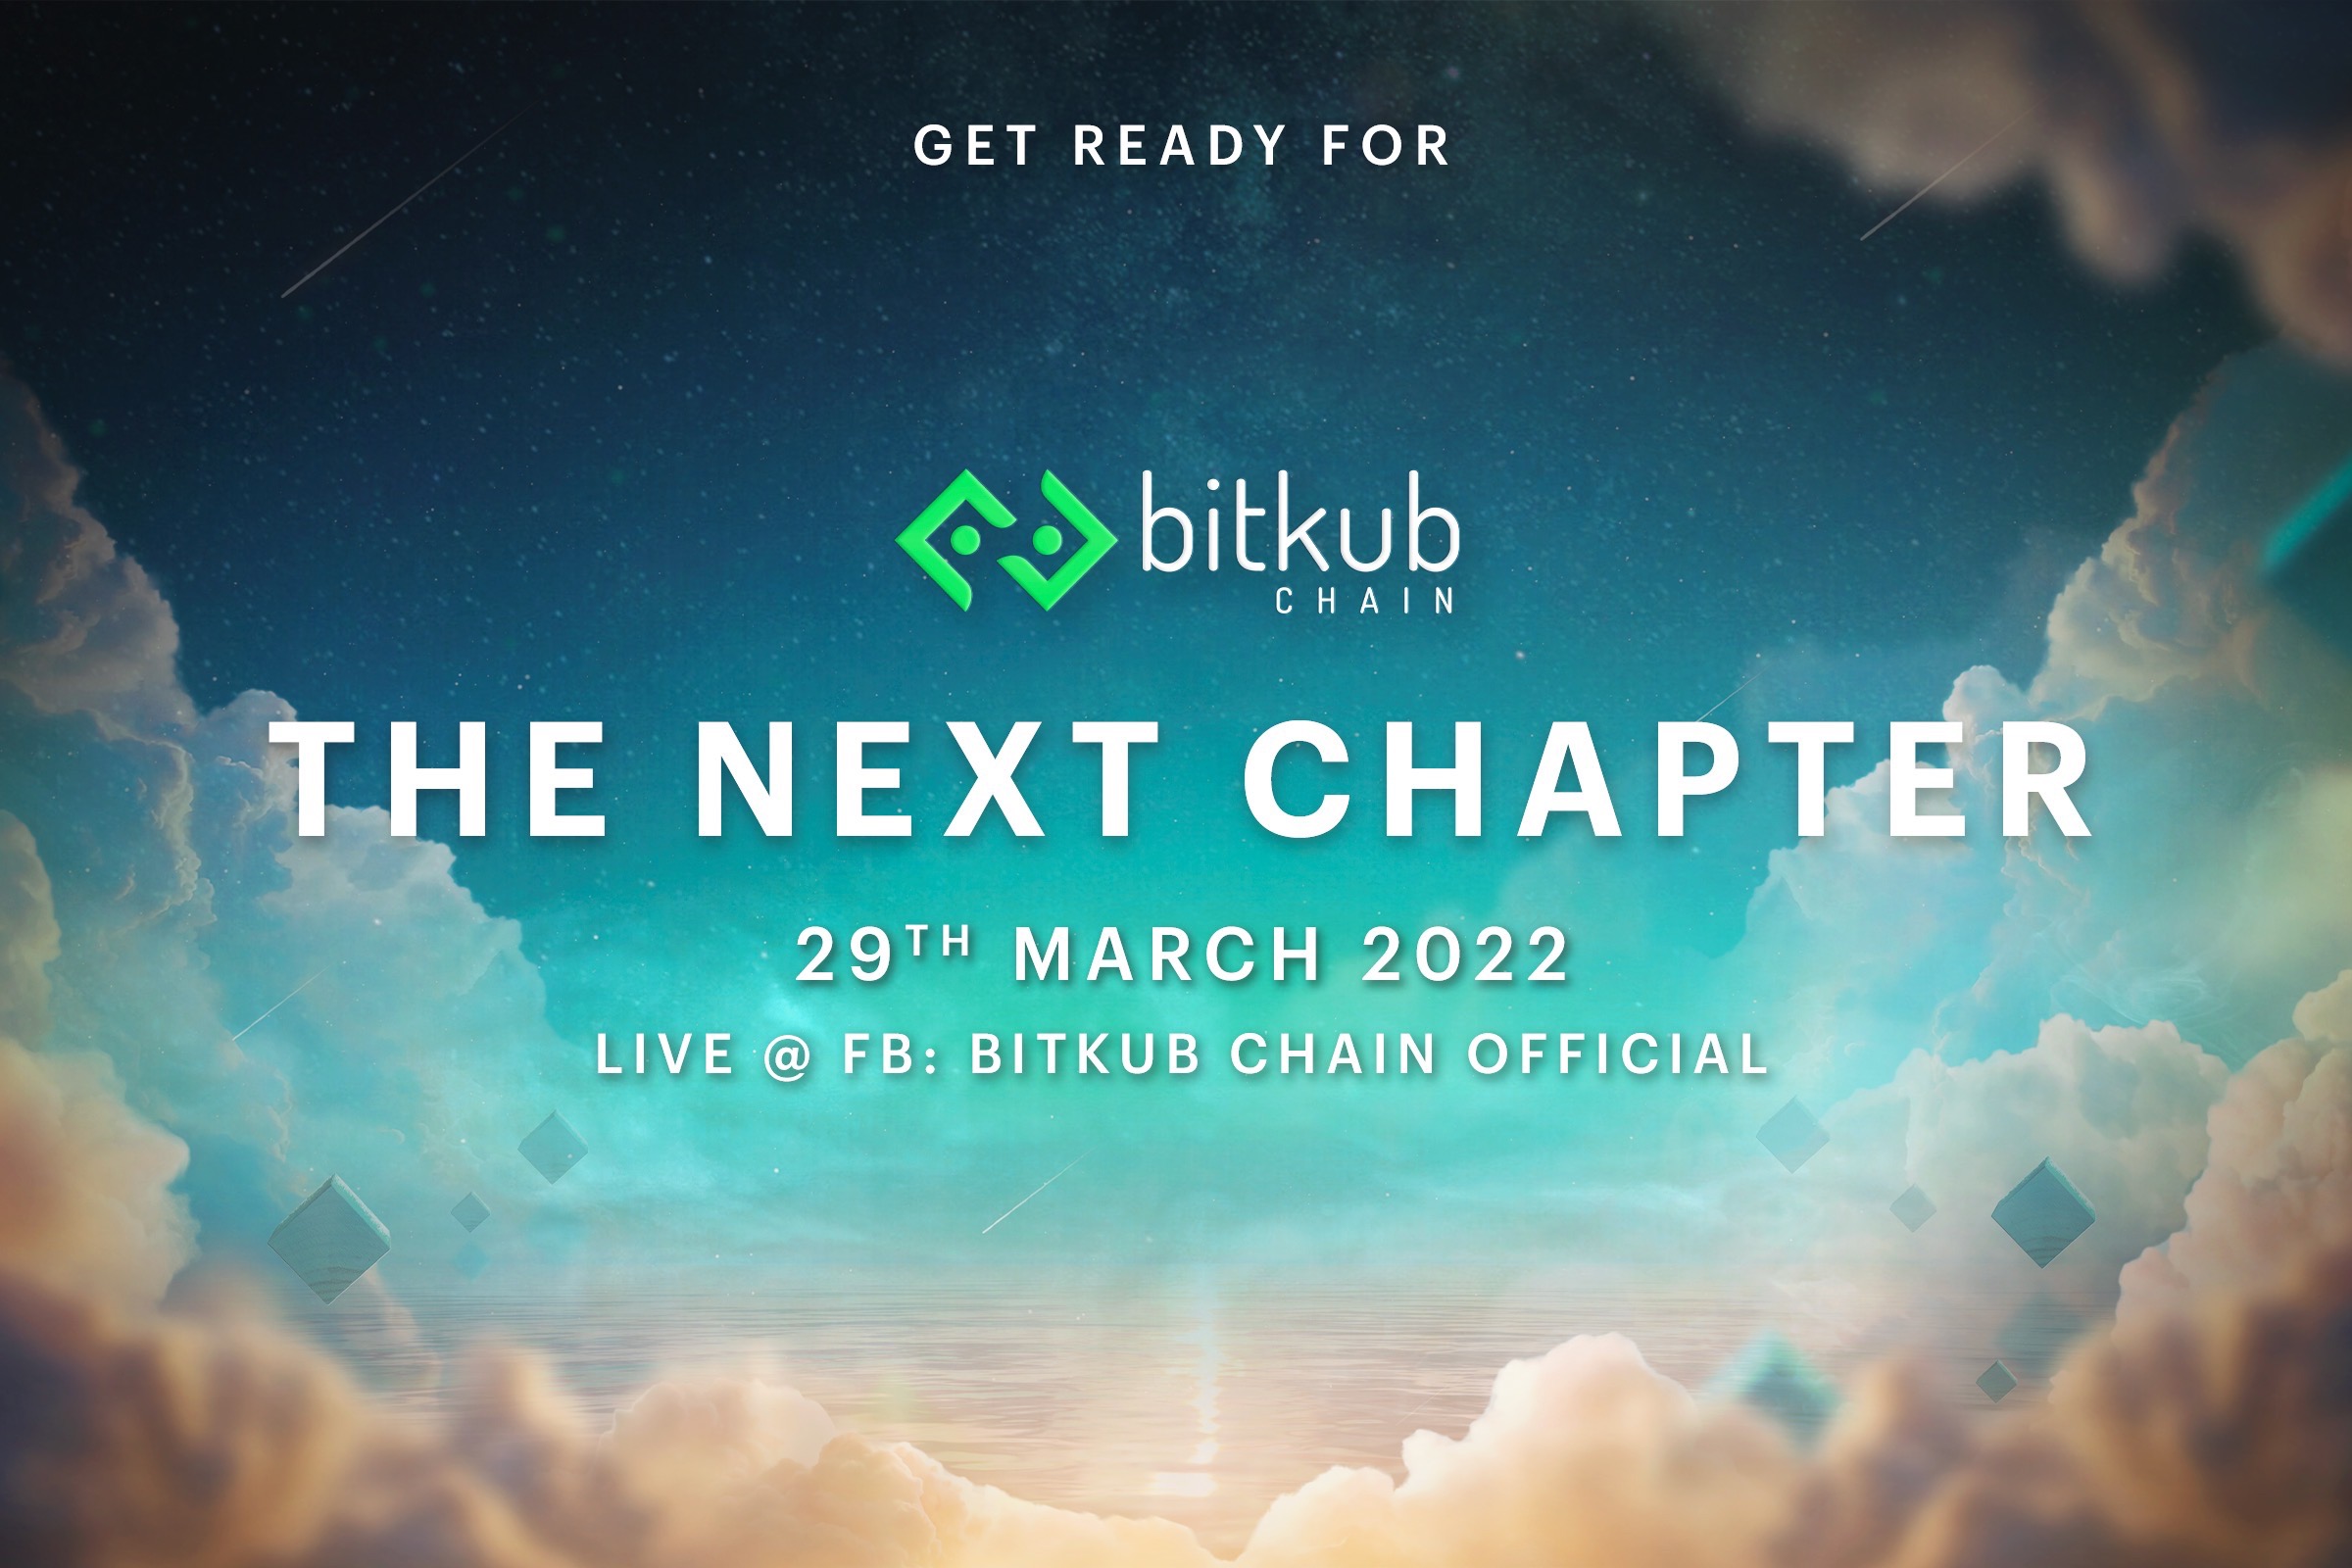 “Bitkub Chain The NEXT Chapter” การพัฒนาครั้งยิ่งใหญ่ของ Bitkub Chain จัดเต็มกิจกรรมสุดพิเศษ รับชม LIVE พร้อมกันทั้งประเทศ 29 มี.ค นี้